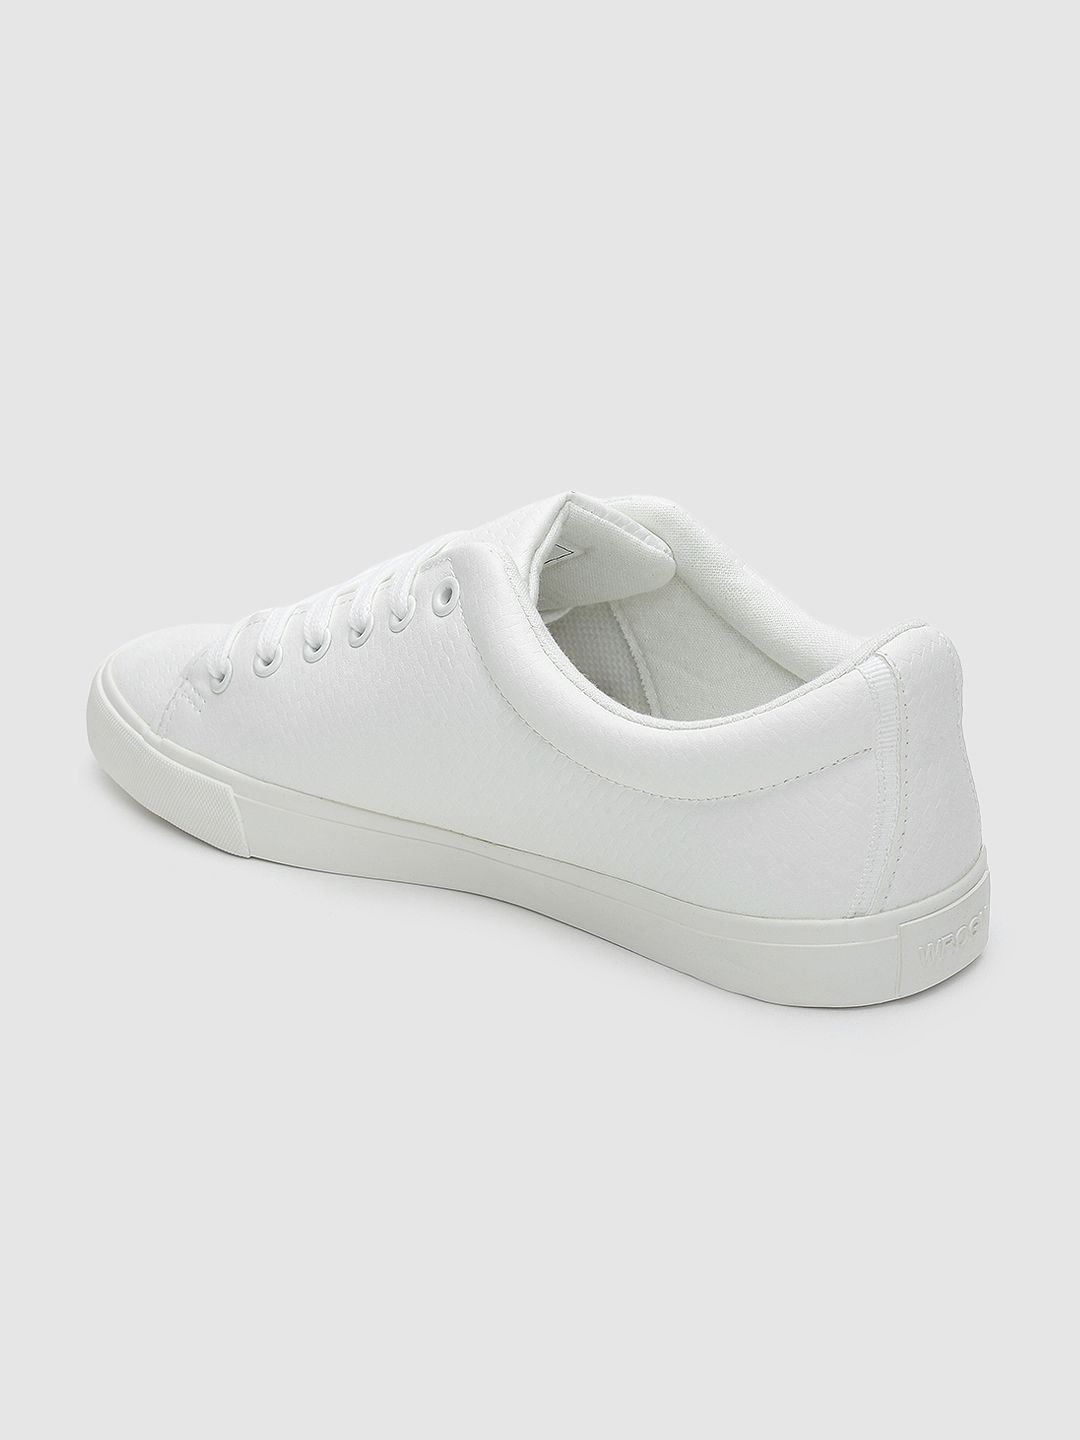 Buy Wrogn Men White Textured Sneakers 